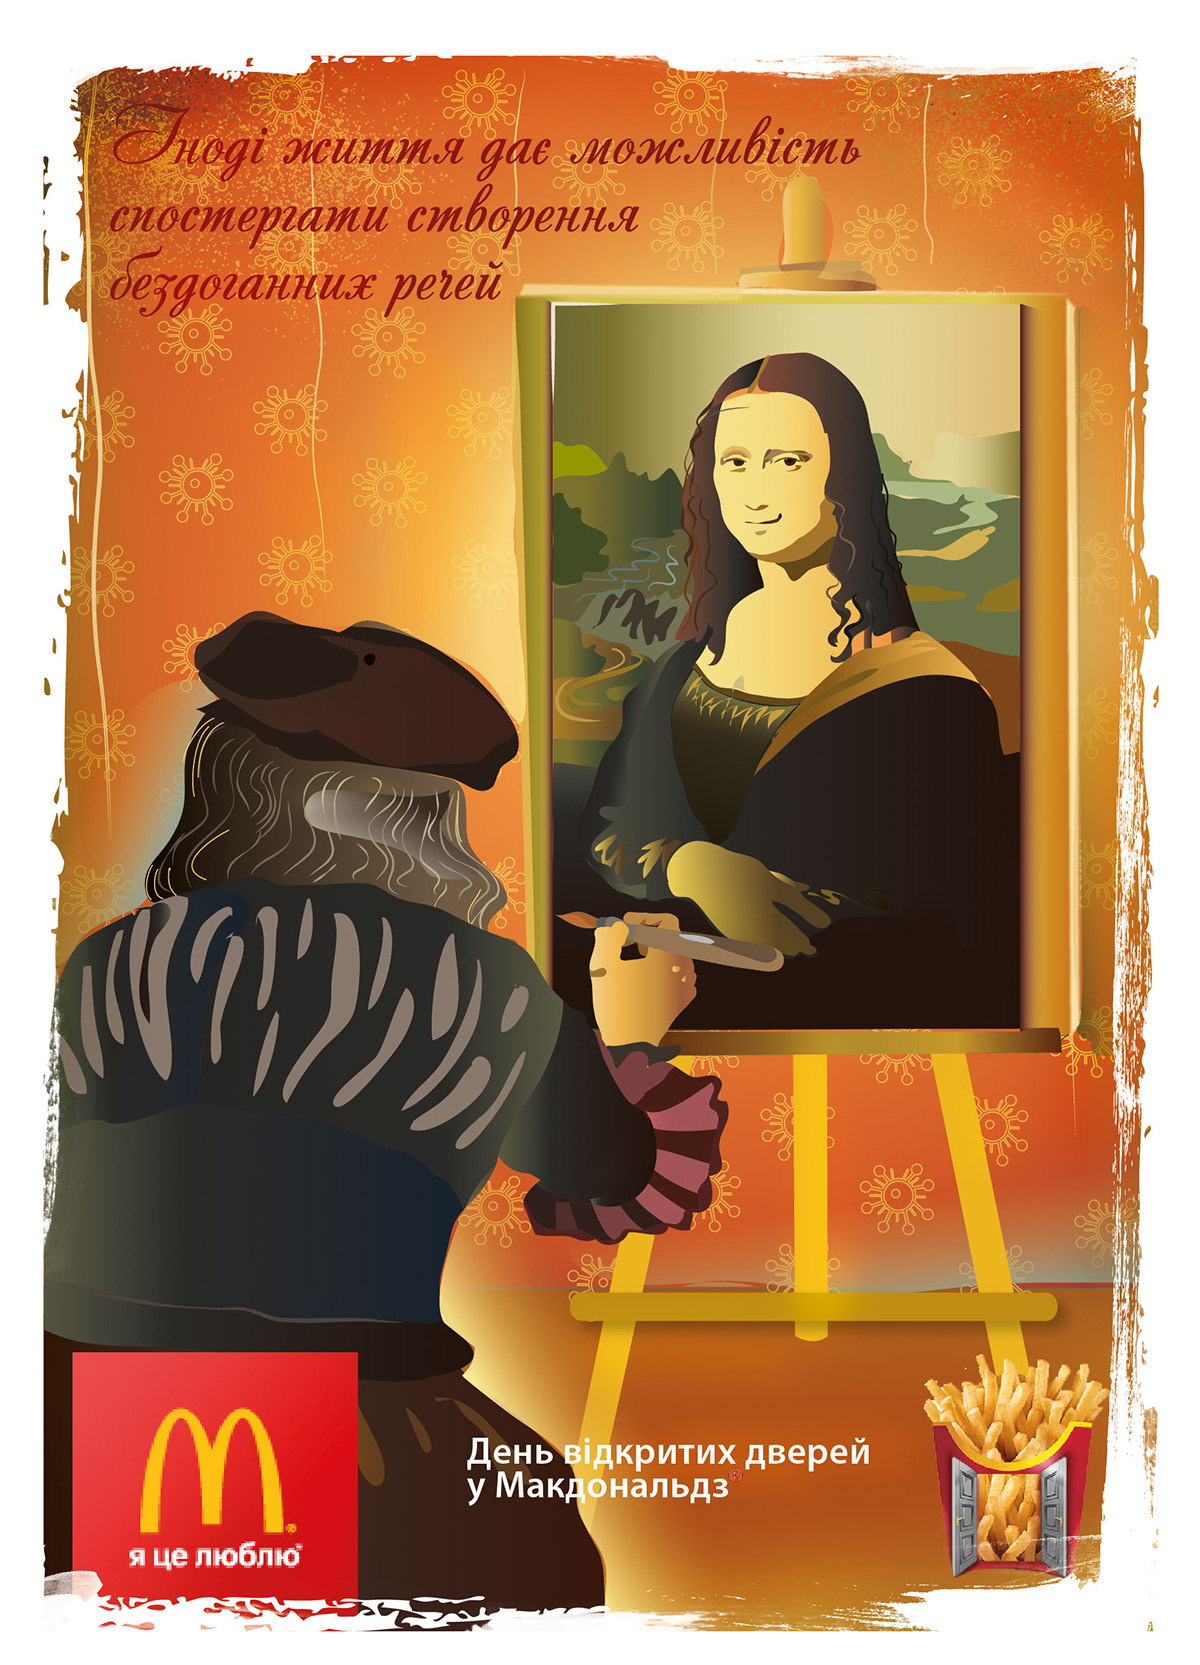 McDonalds perfect Quality mark poster Quality Leonardo Mona Lisa Faberge